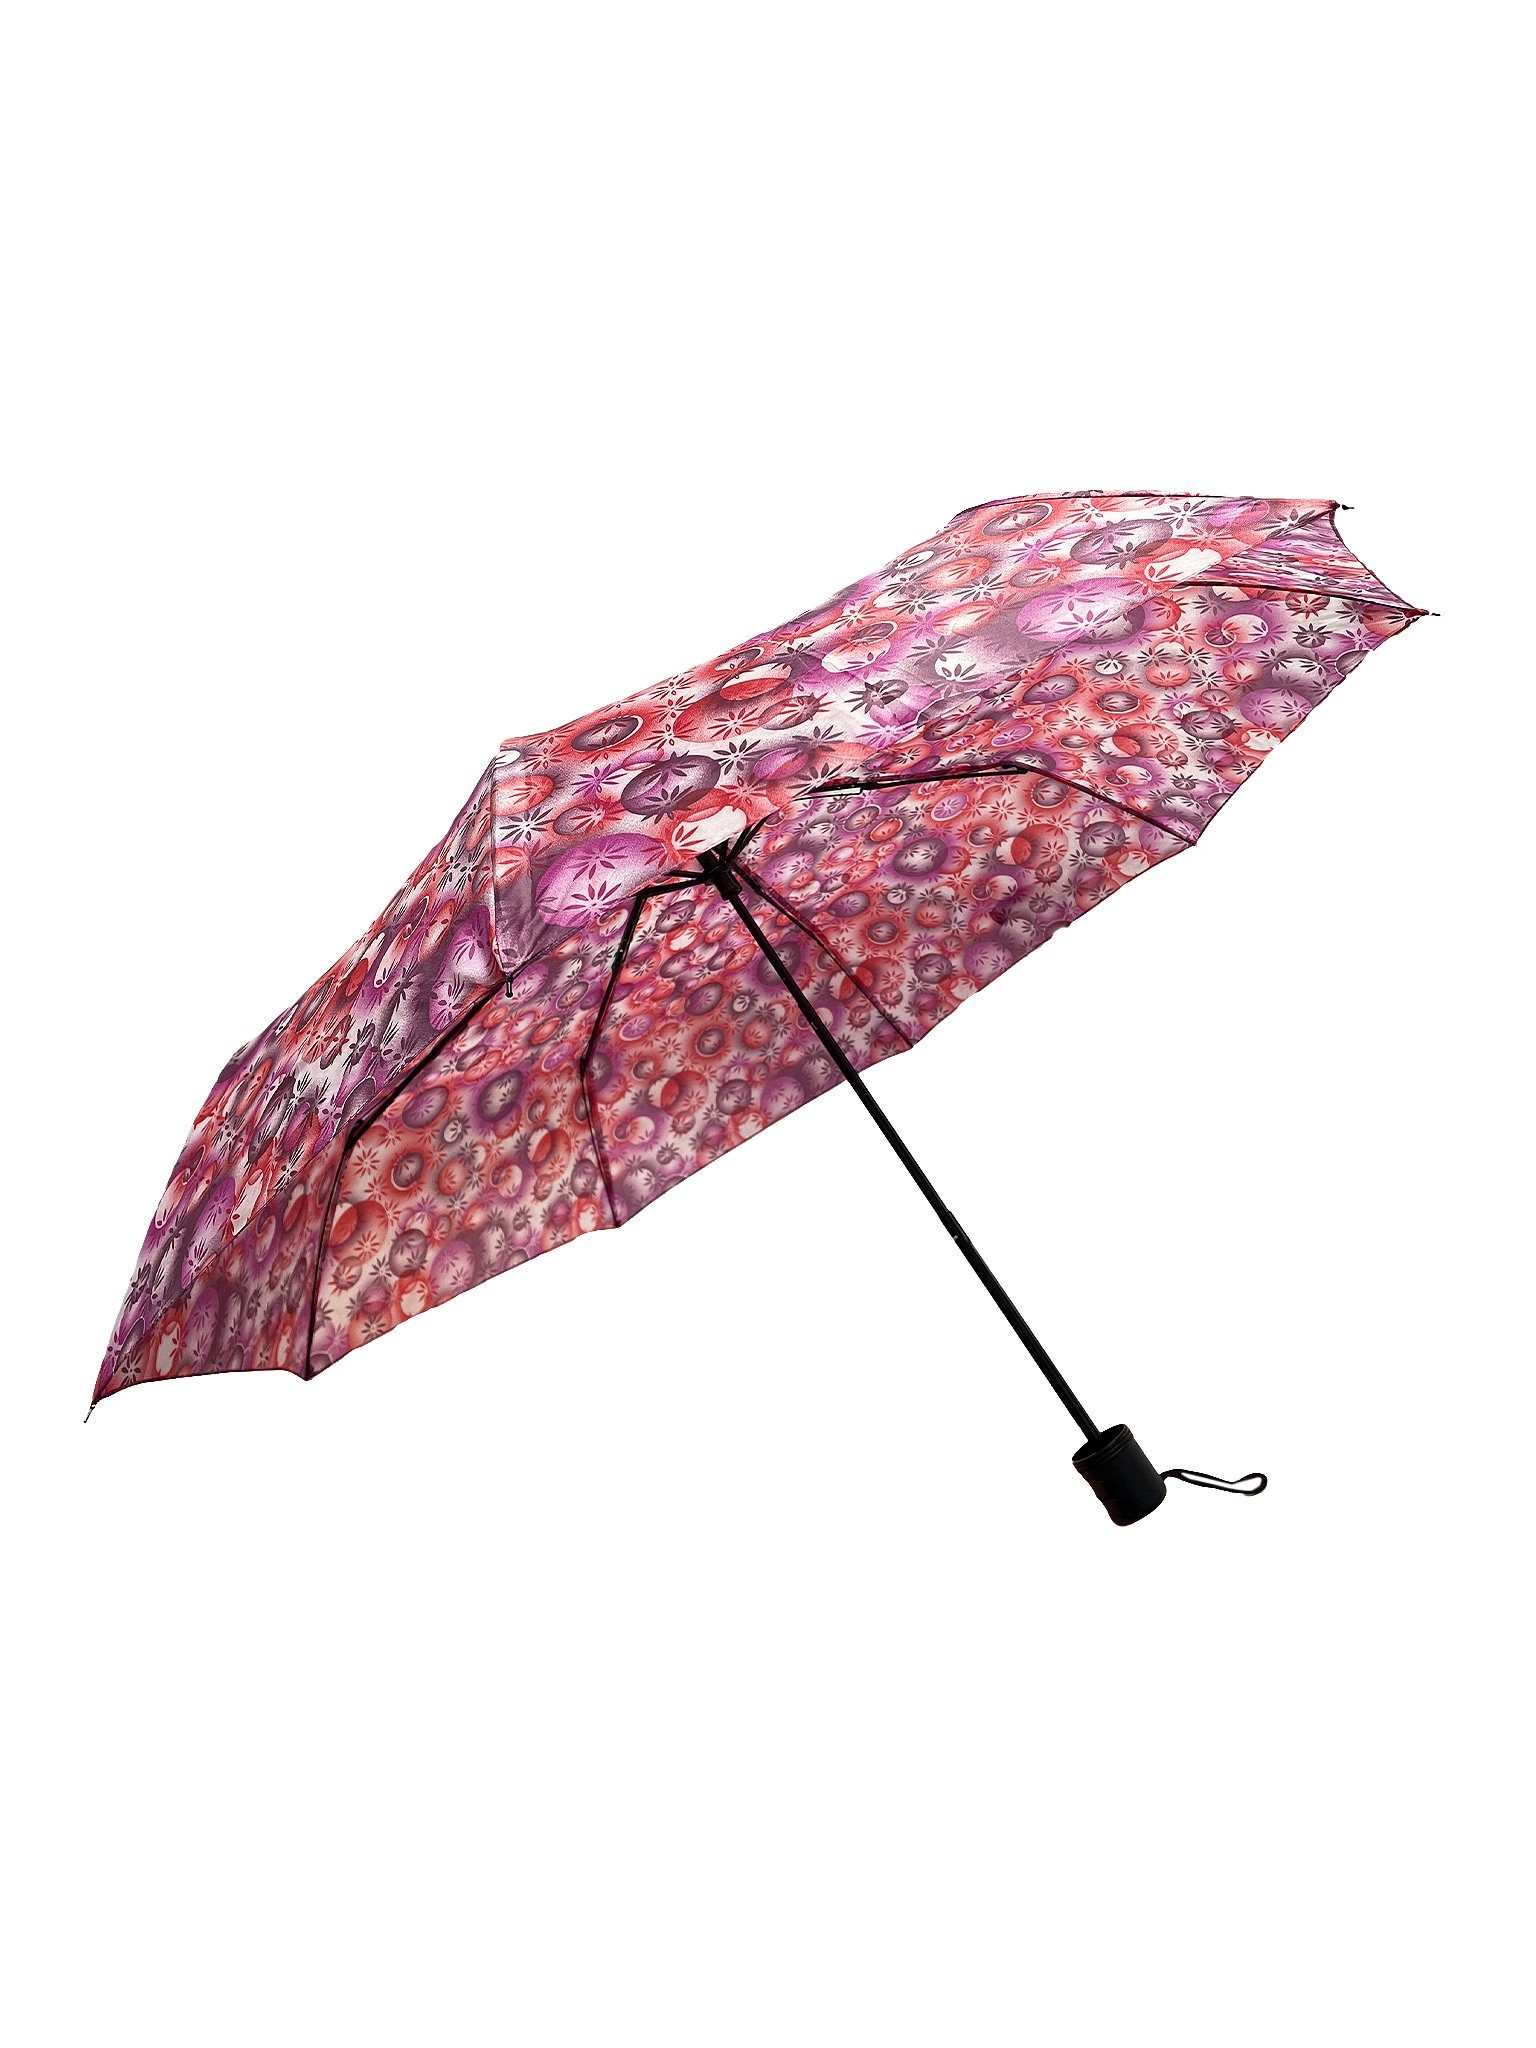 ANELY Taschenregenschirm Kleiner Regenschirm Paris Gemustert Taschenschirm, 6746 in Rosa | Taschenschirme